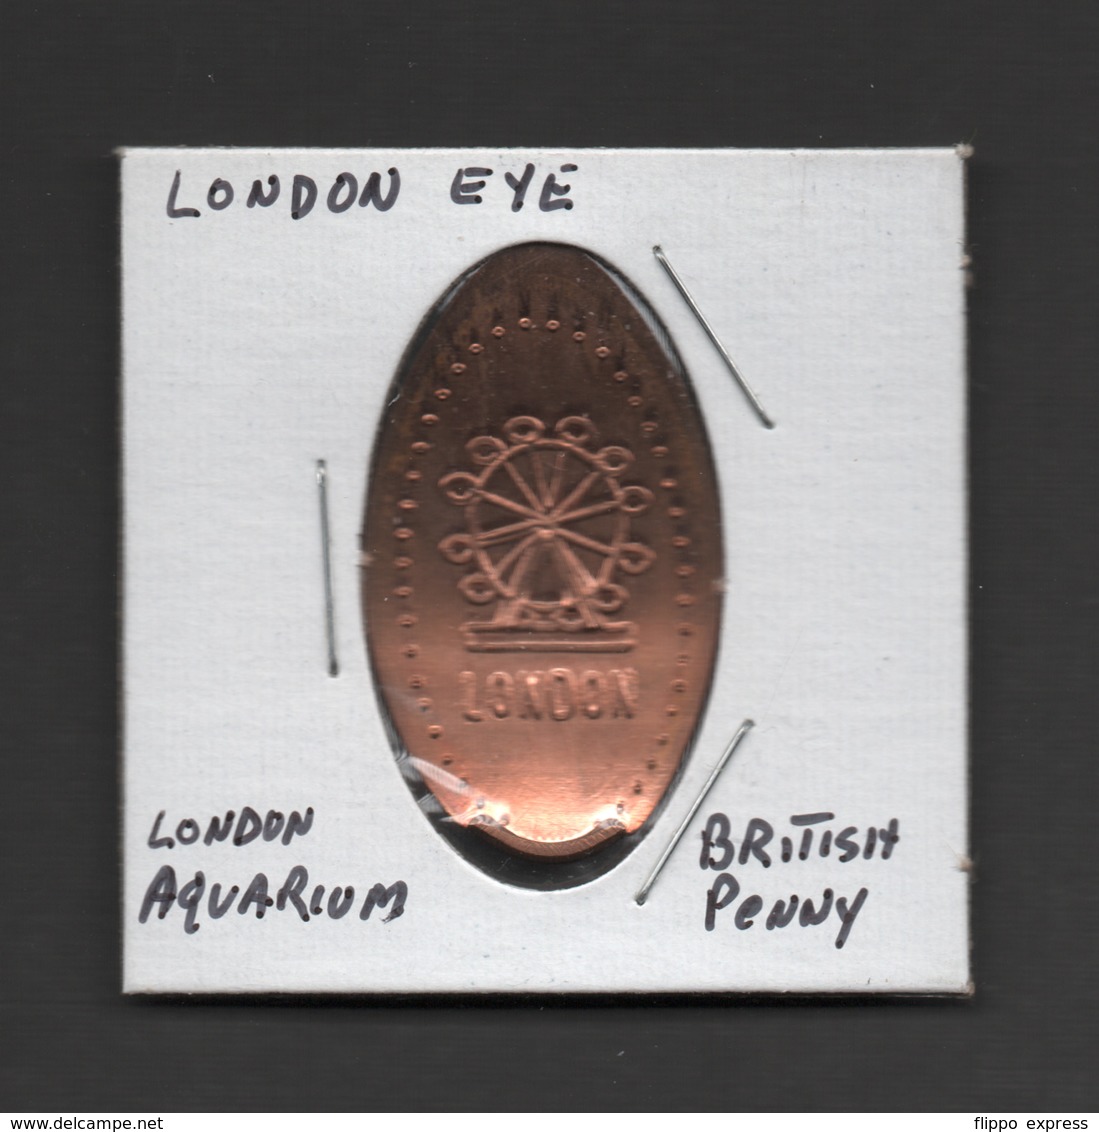 Pressed Penny, Elongated Coin, London Eye, England - Souvenirmunten (elongated Coins)